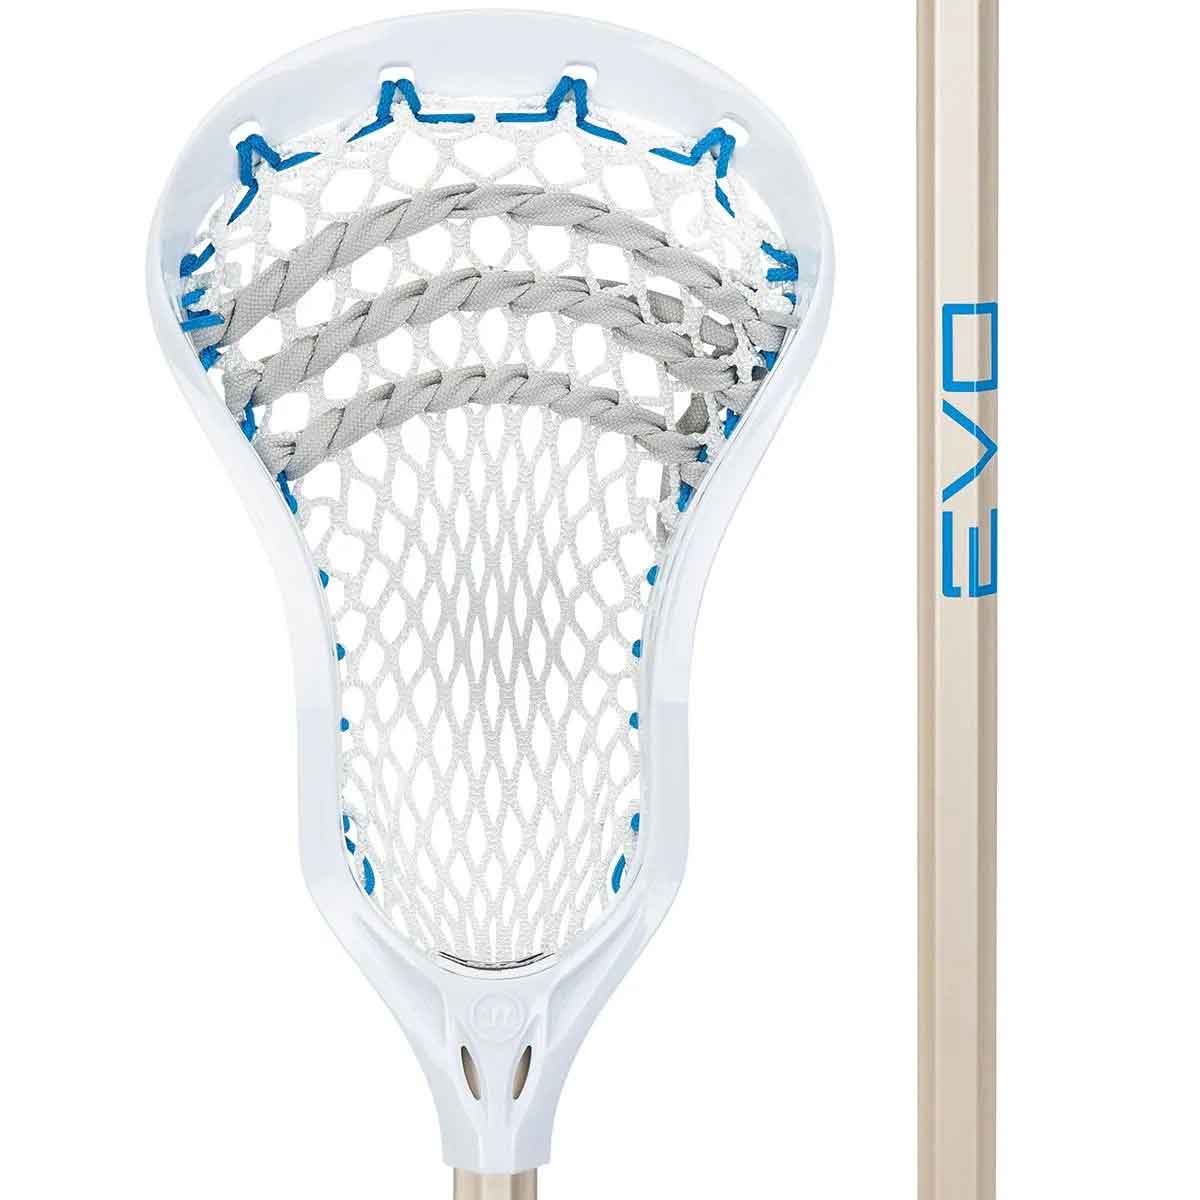 Picture of the silver Warrior Evo Next Complete Lacrosse Stick